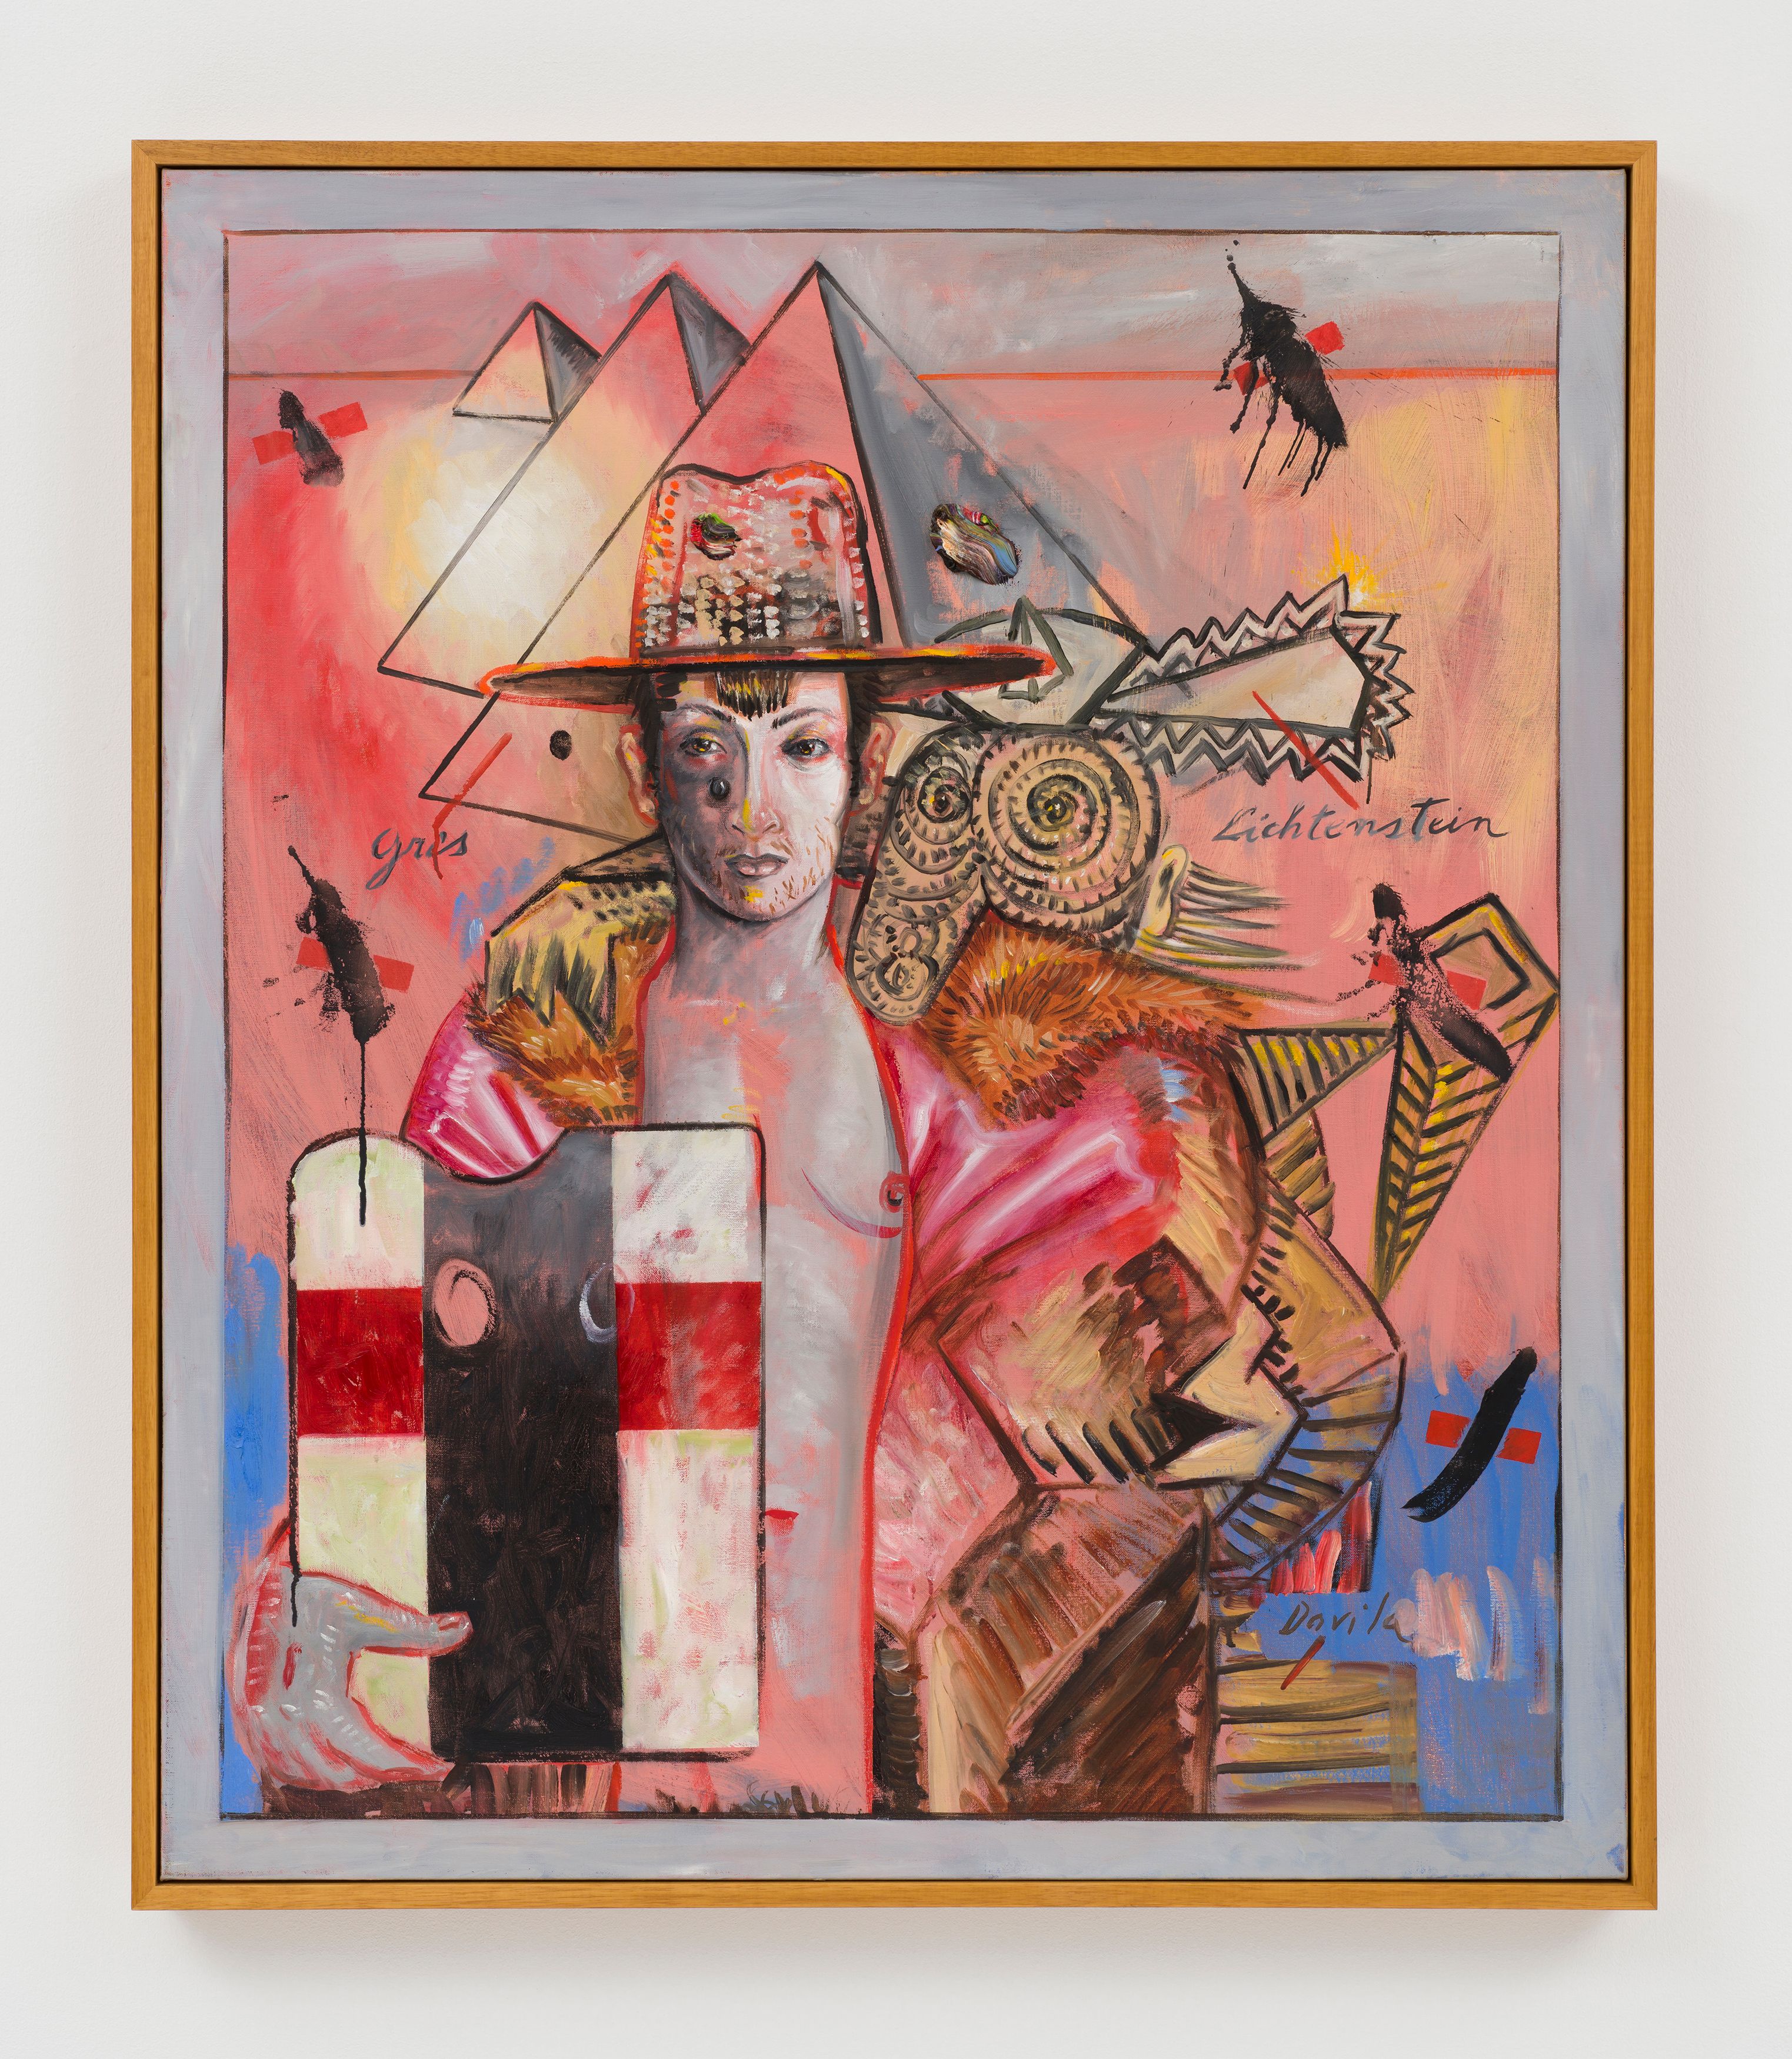 Juan Davila, Ned Kelly’s Psychosis, 1984, oil on canvas, 41 5/16 x 35 7/16 in. (105 x 90 cm)